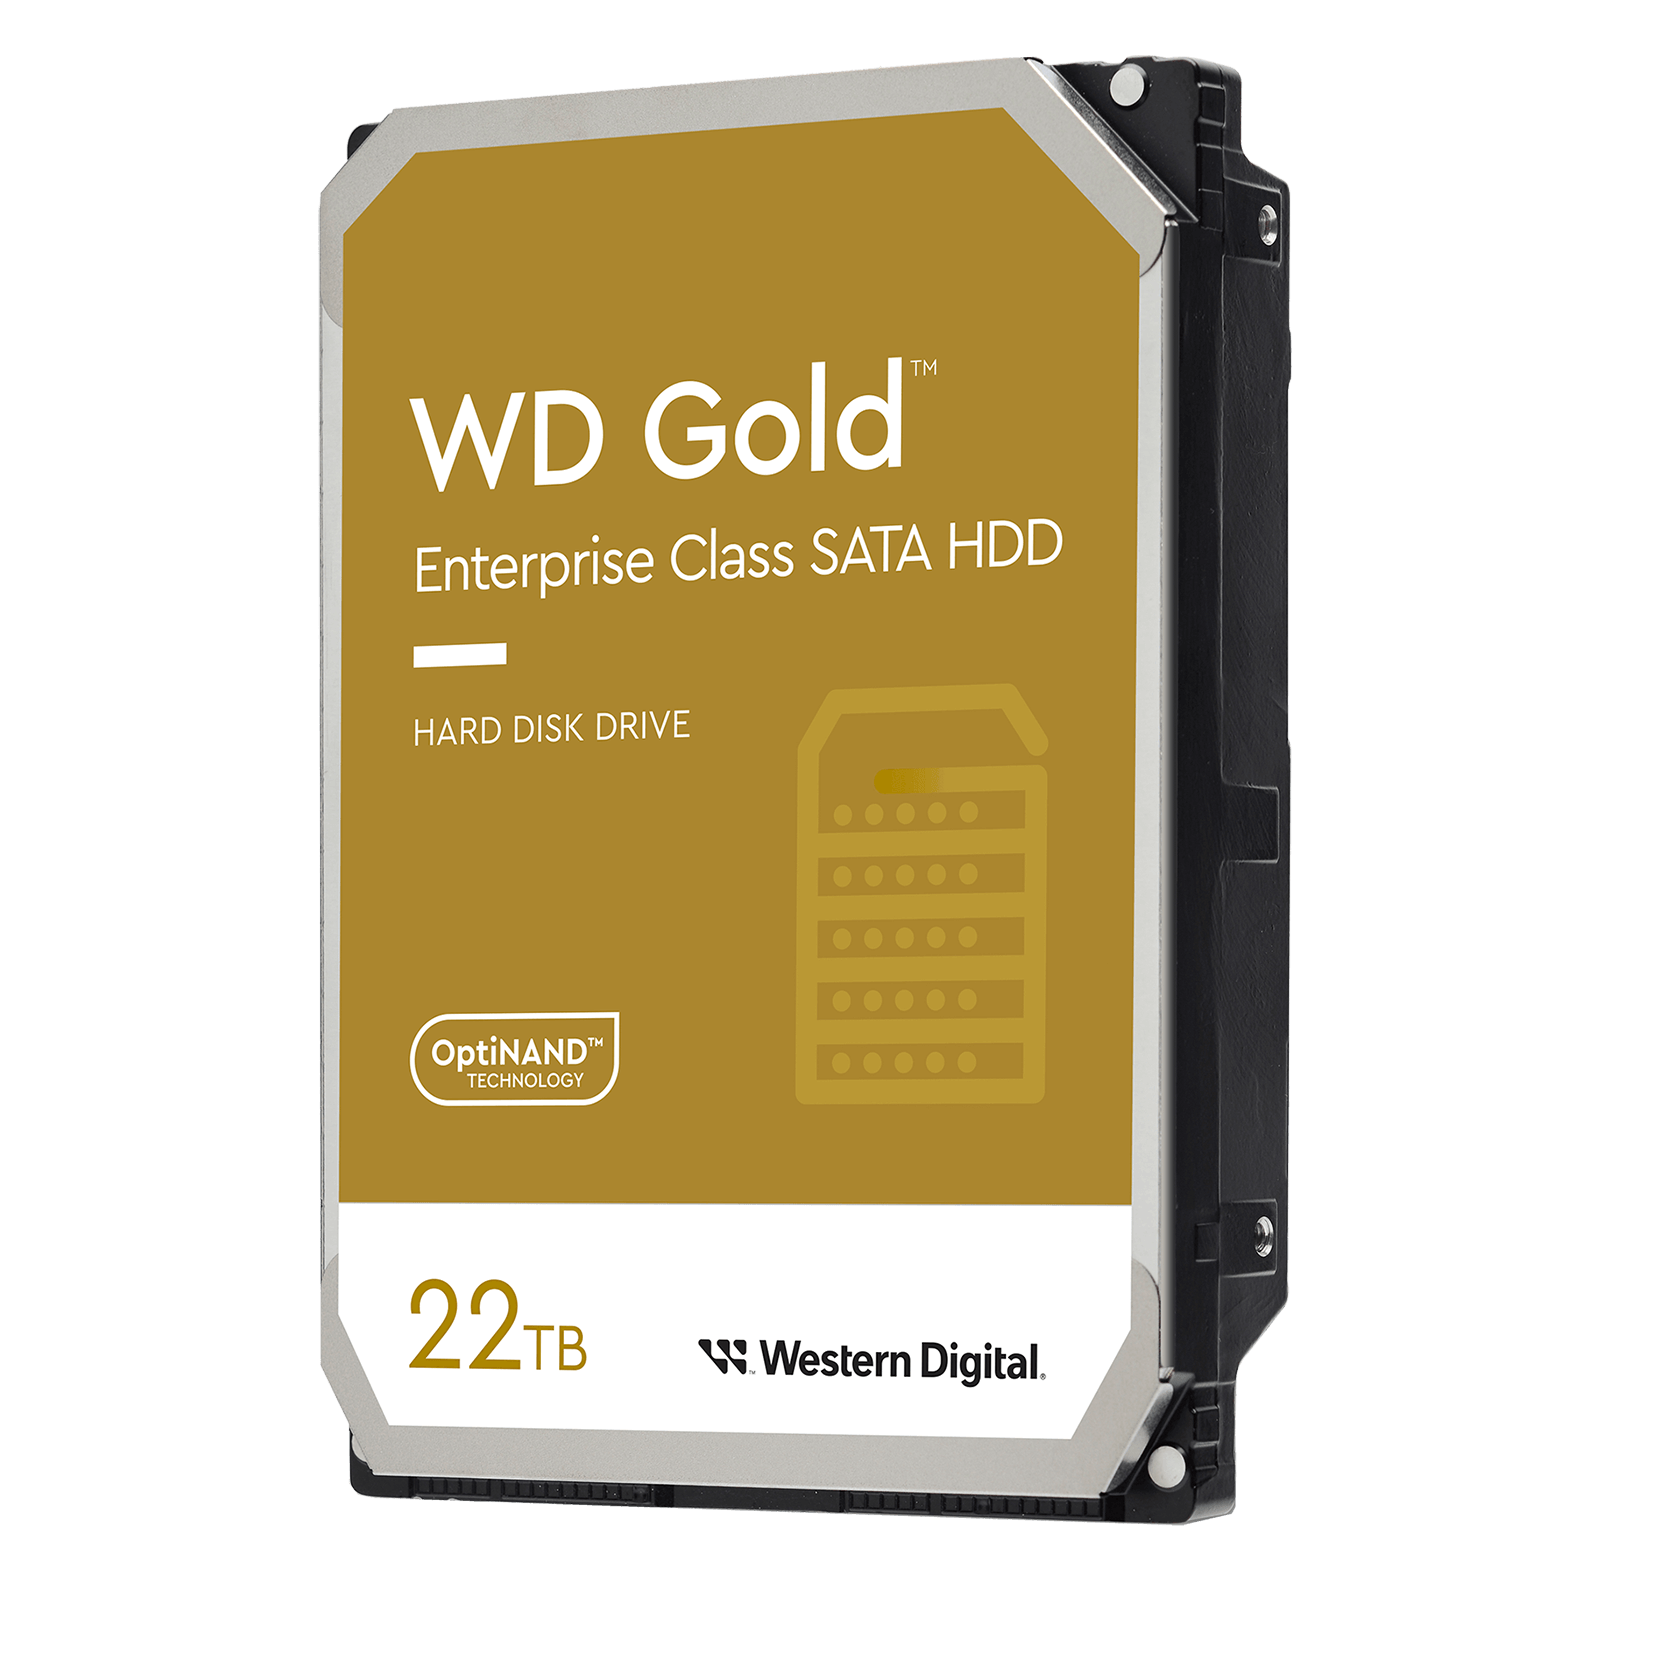 Western Digital 22TB WD Gold™ Enterprise Class SATA HDD - Internal Hard Drive - WD221KRYZ